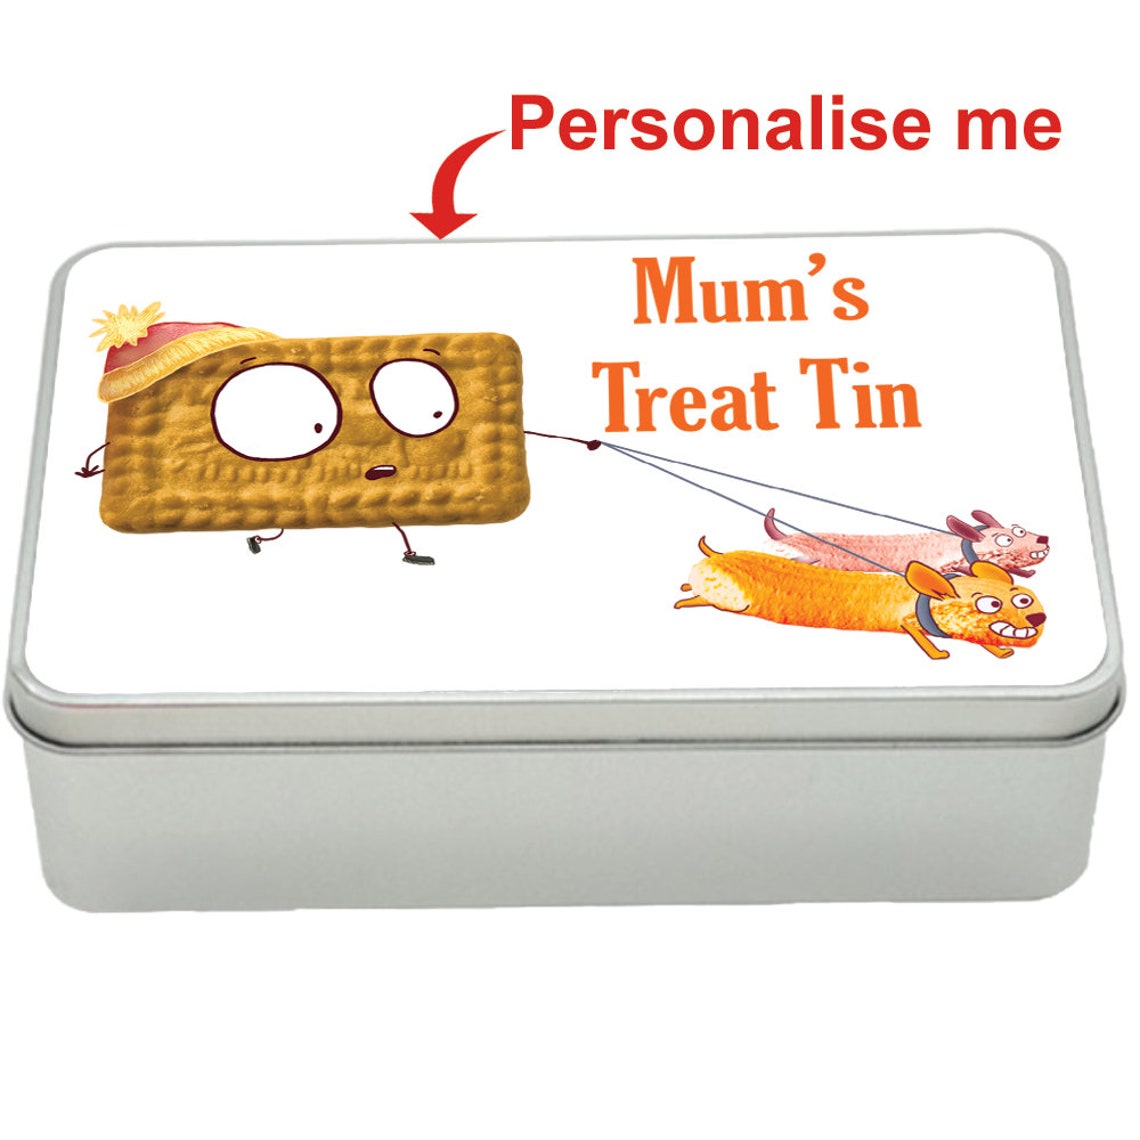 Malted Milk Dog Walk treat tin gift idea, personalised storage tin biscuits